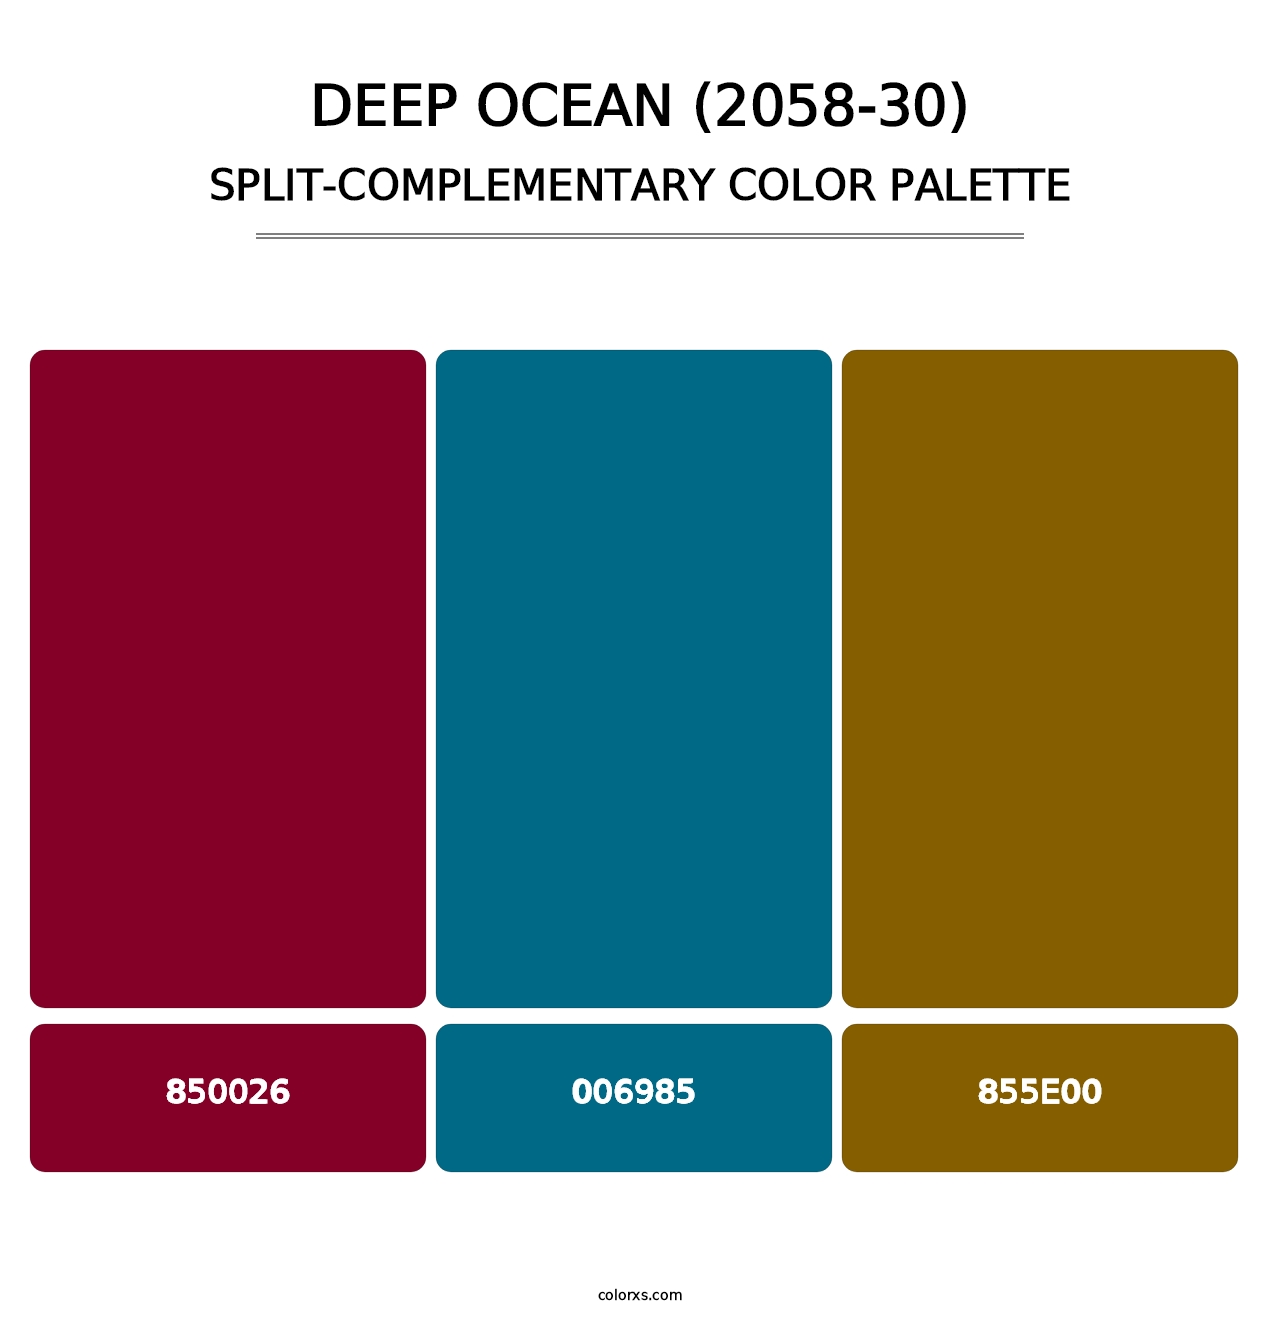 Deep Ocean (2058-30) - Split-Complementary Color Palette